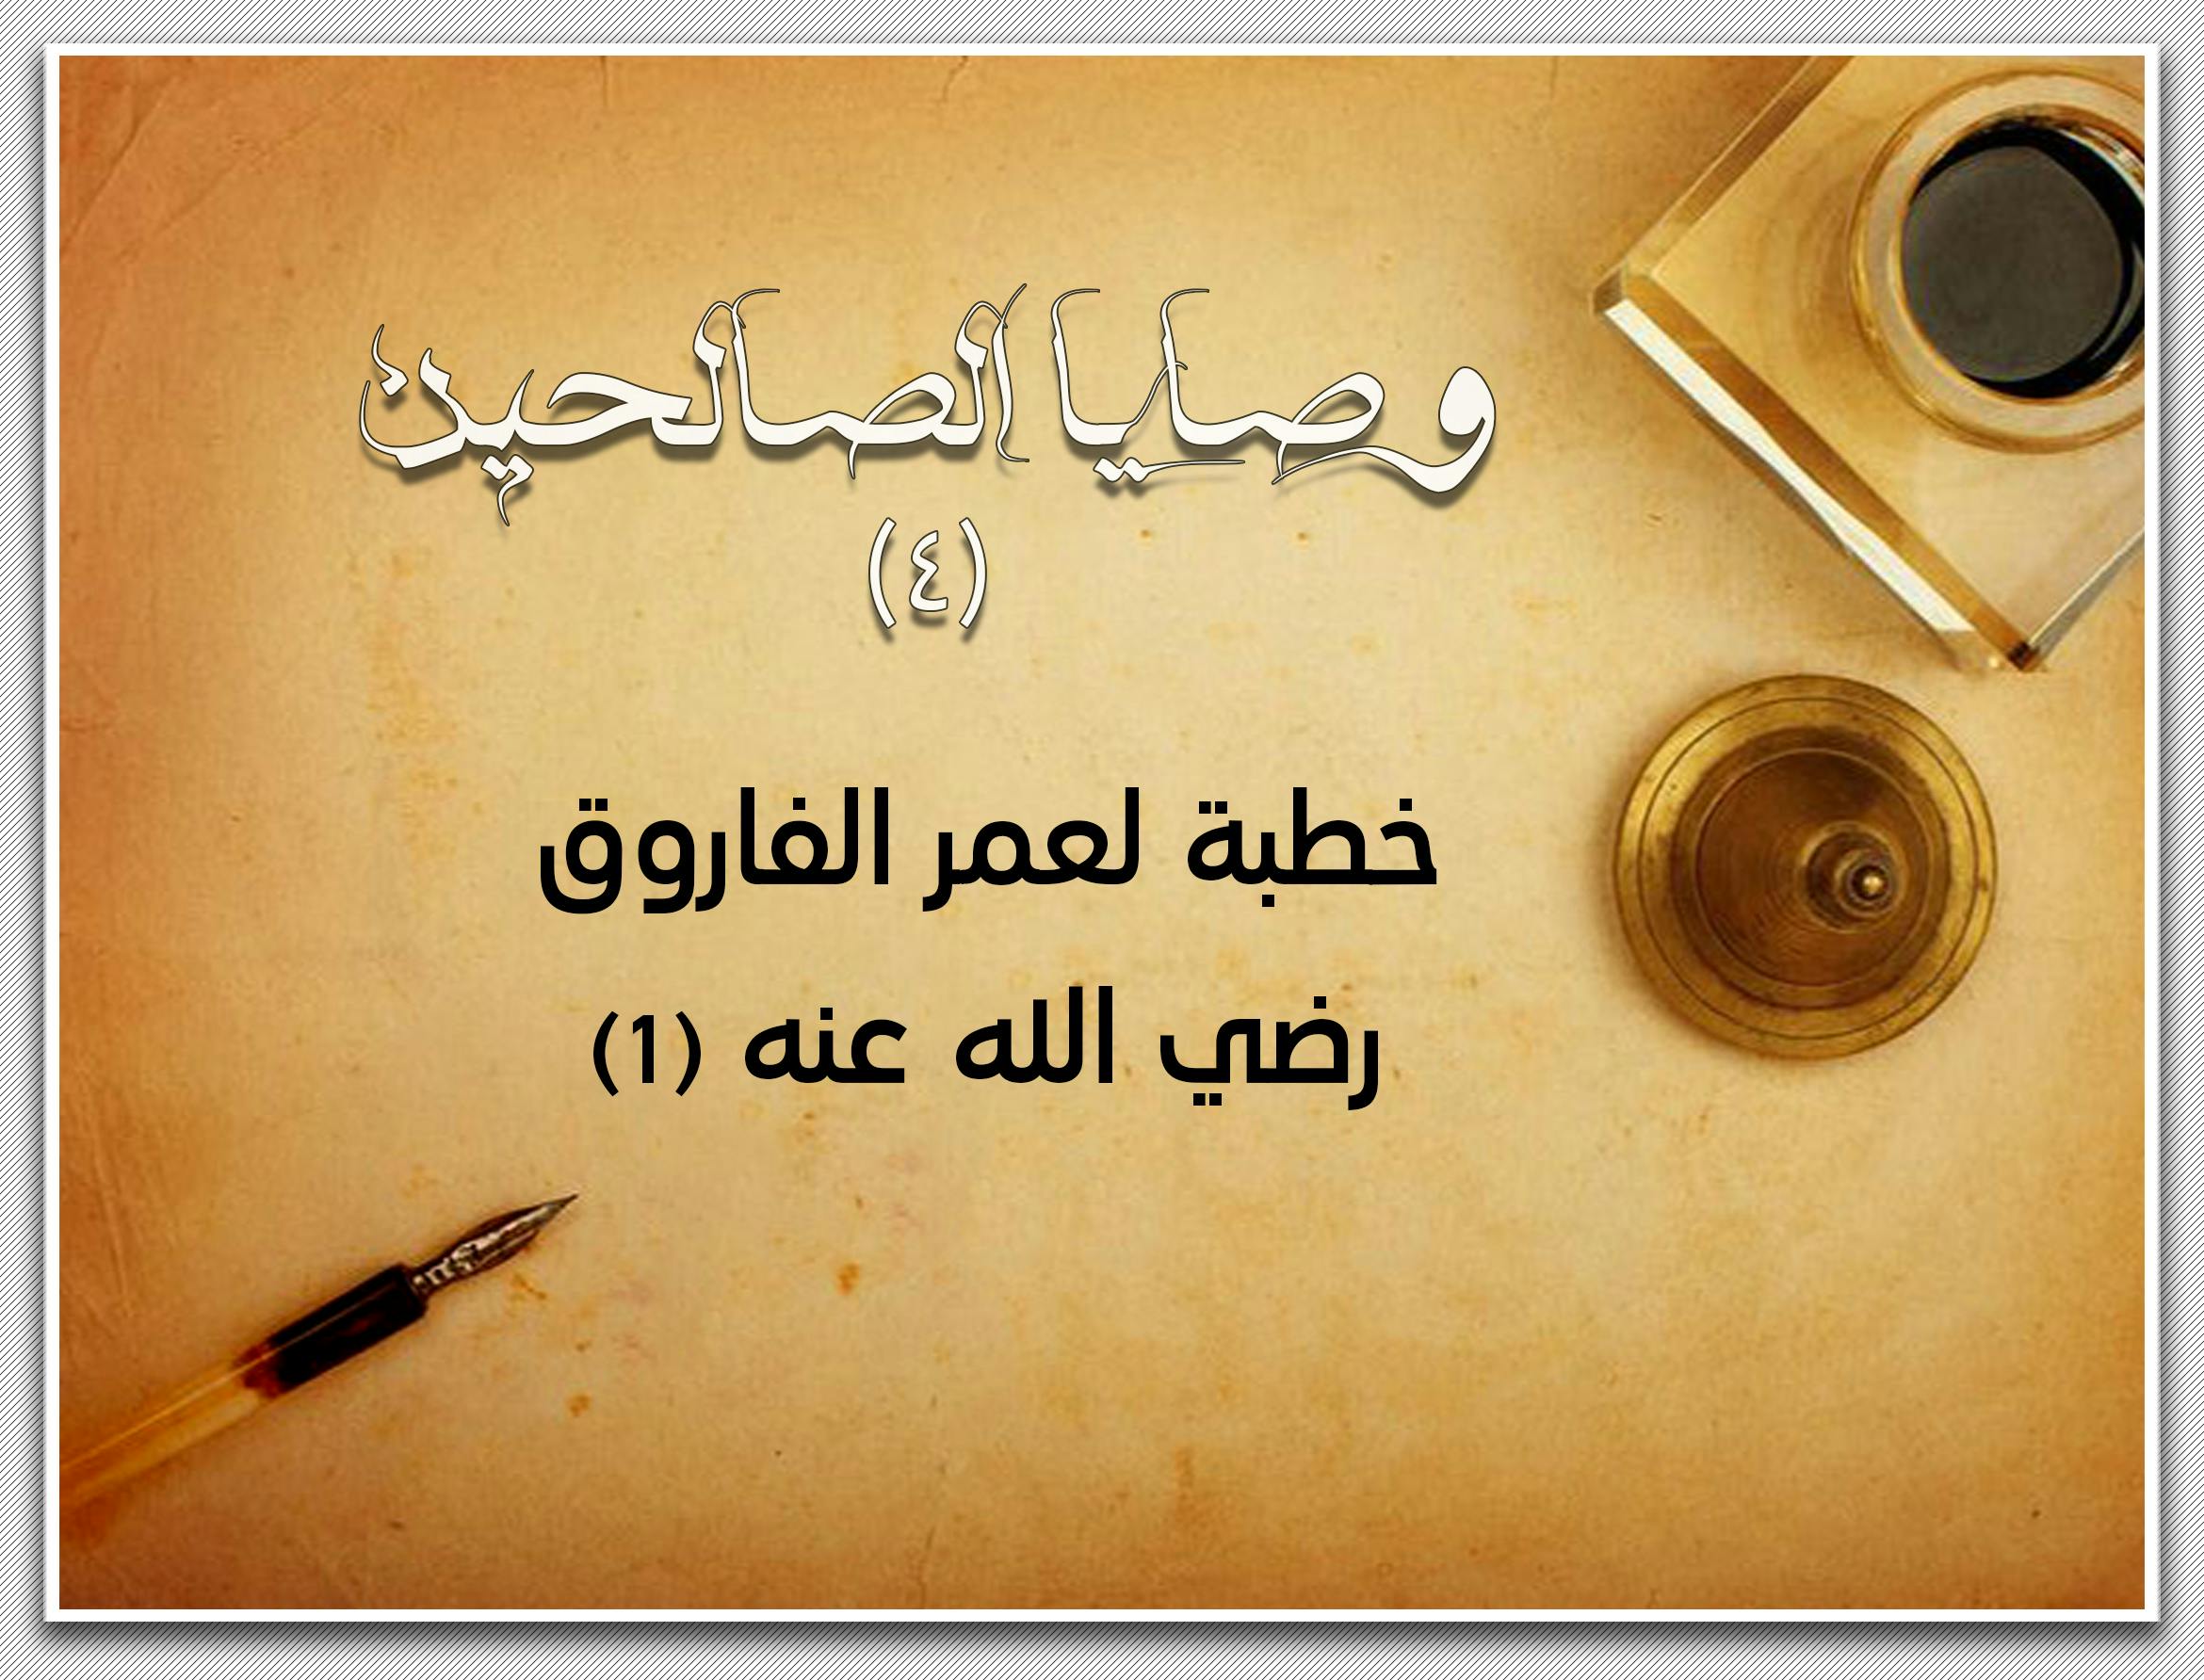 Cover Image for وصايا الصالحين (4) | أول خطبة لعمر الفاروق رضي الله عنه